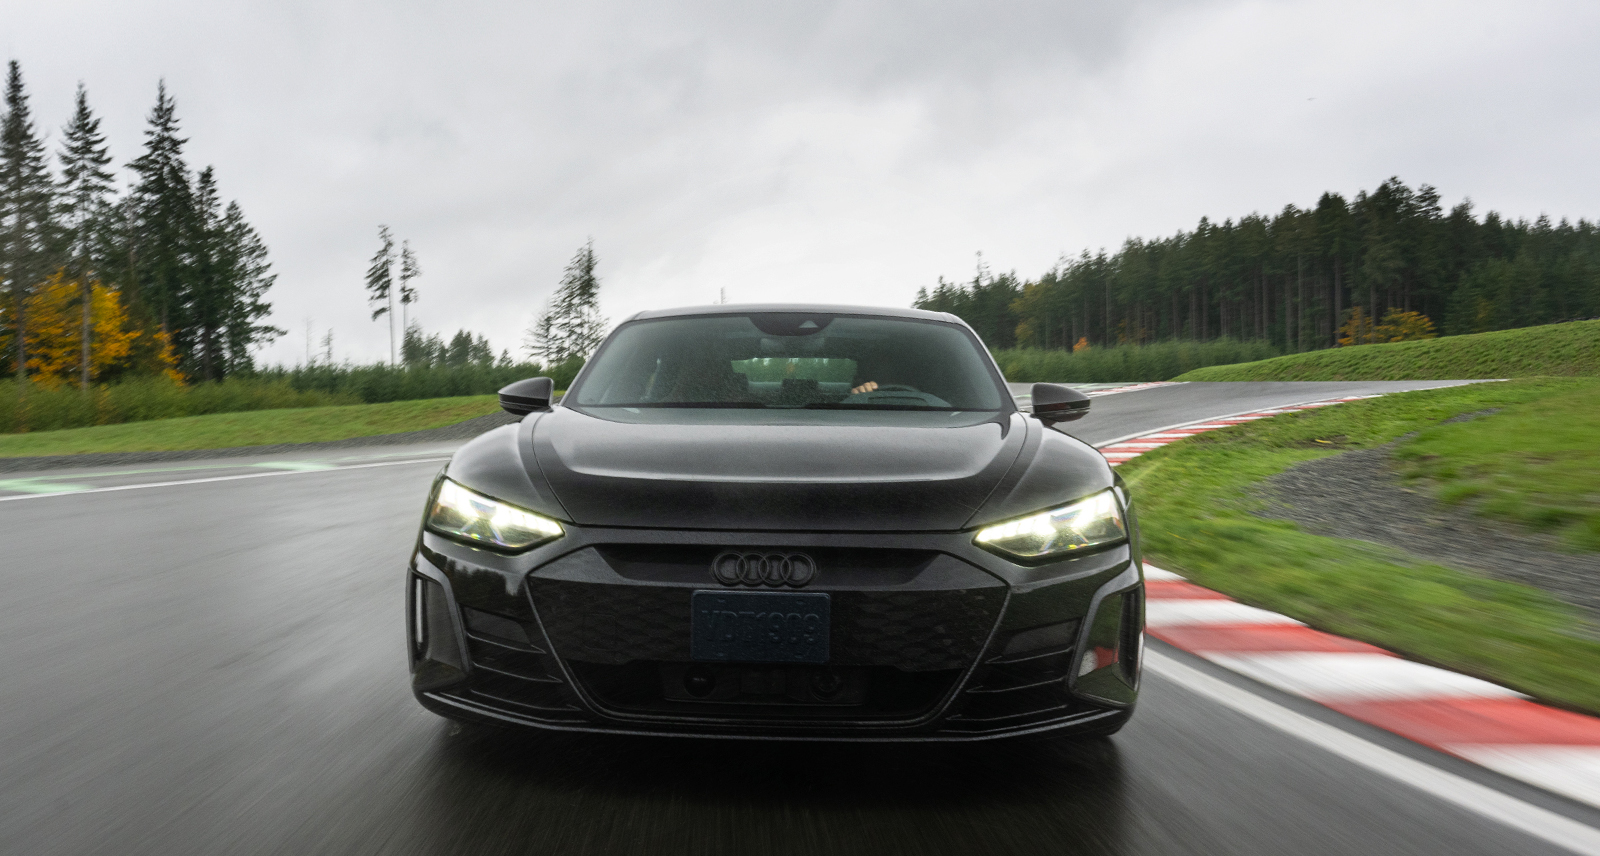 Audi drives on racetrack, close-up shot of headlights